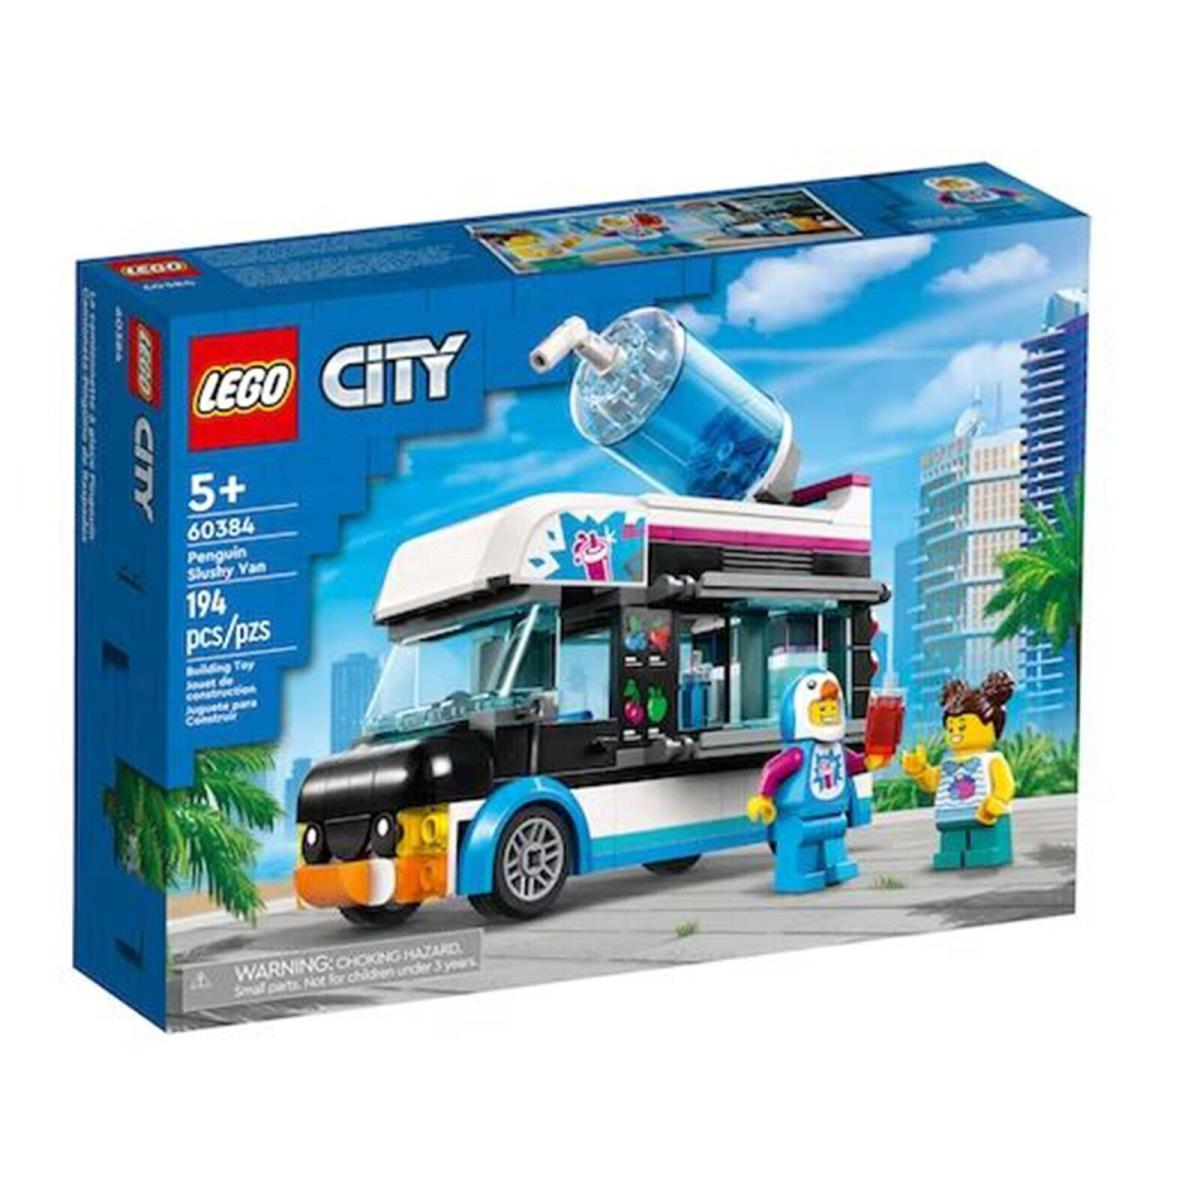 Lego City Penguin Slushy Van Building Set 60384